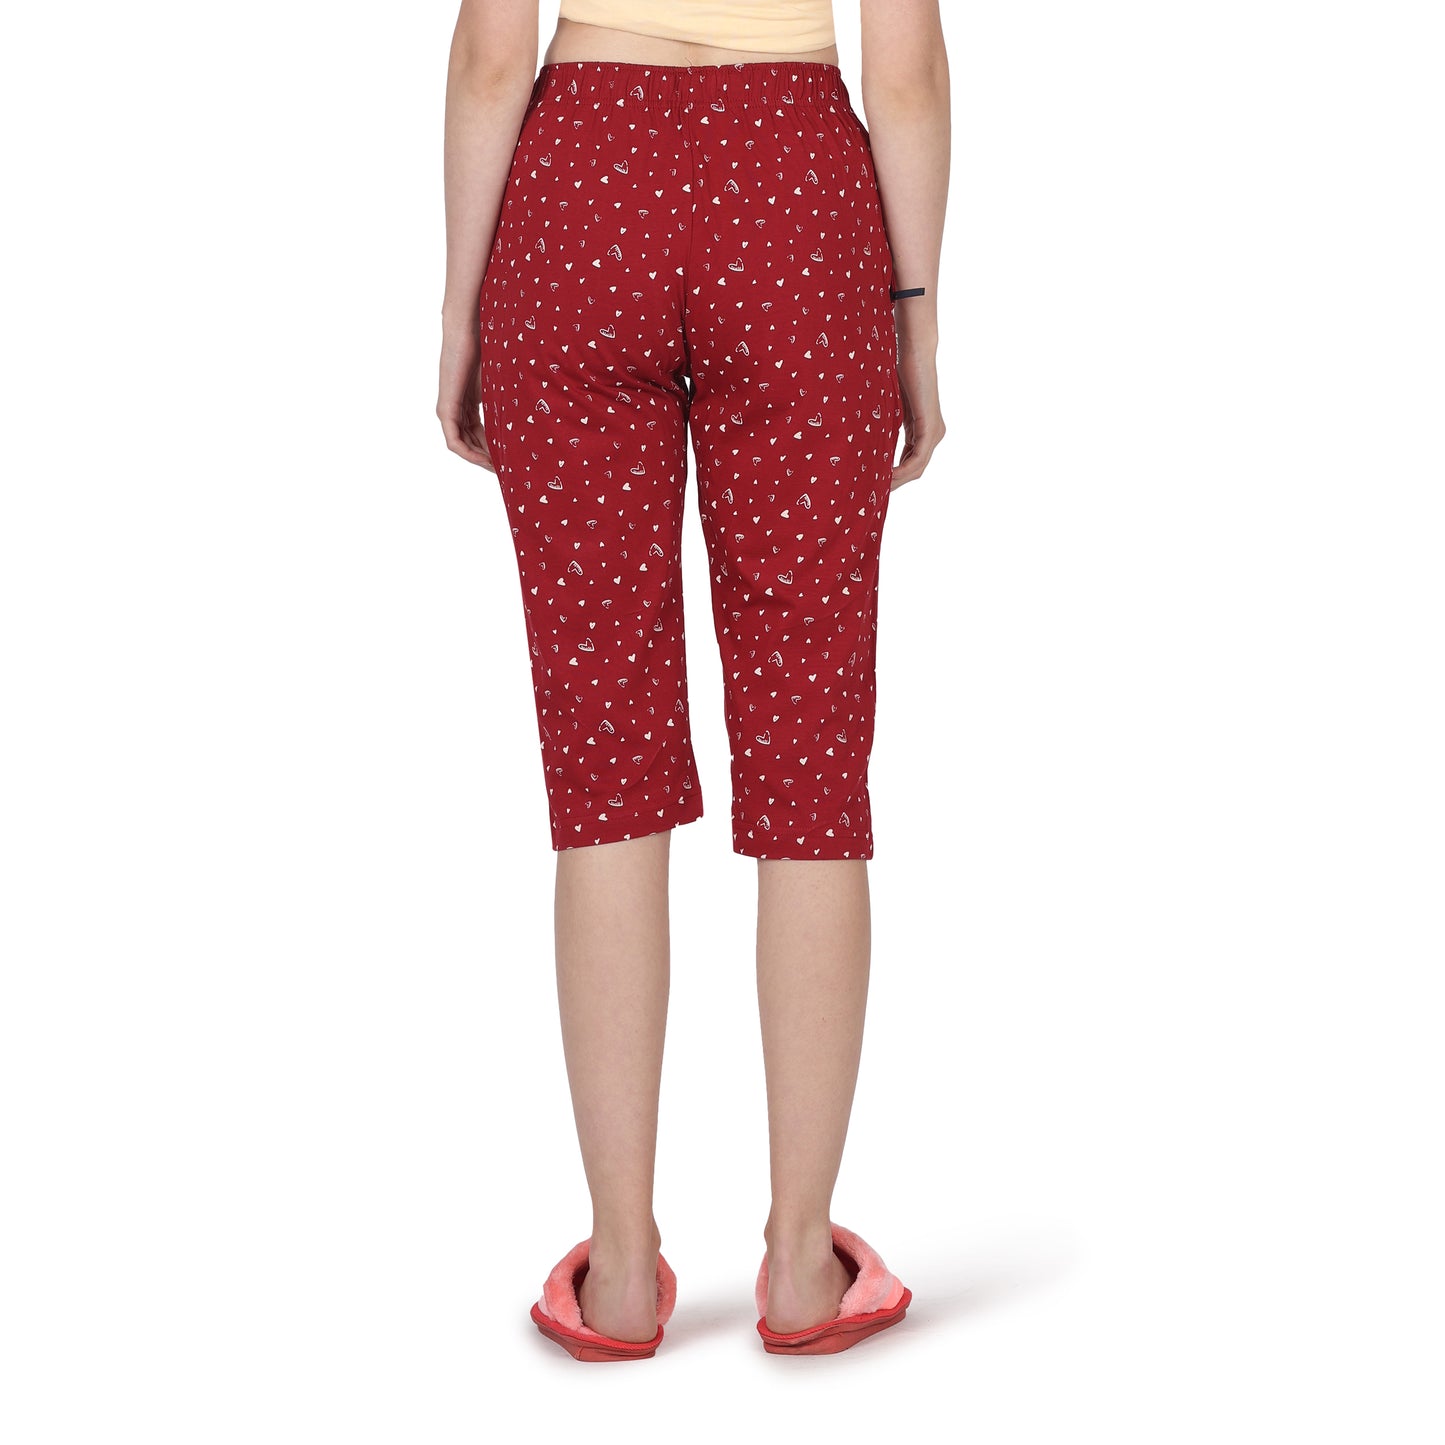 Eazy Women's Printed Capri Pants- Pack of 5- Blush, Black, Navy Blue, Steel Blue & Cherry Red